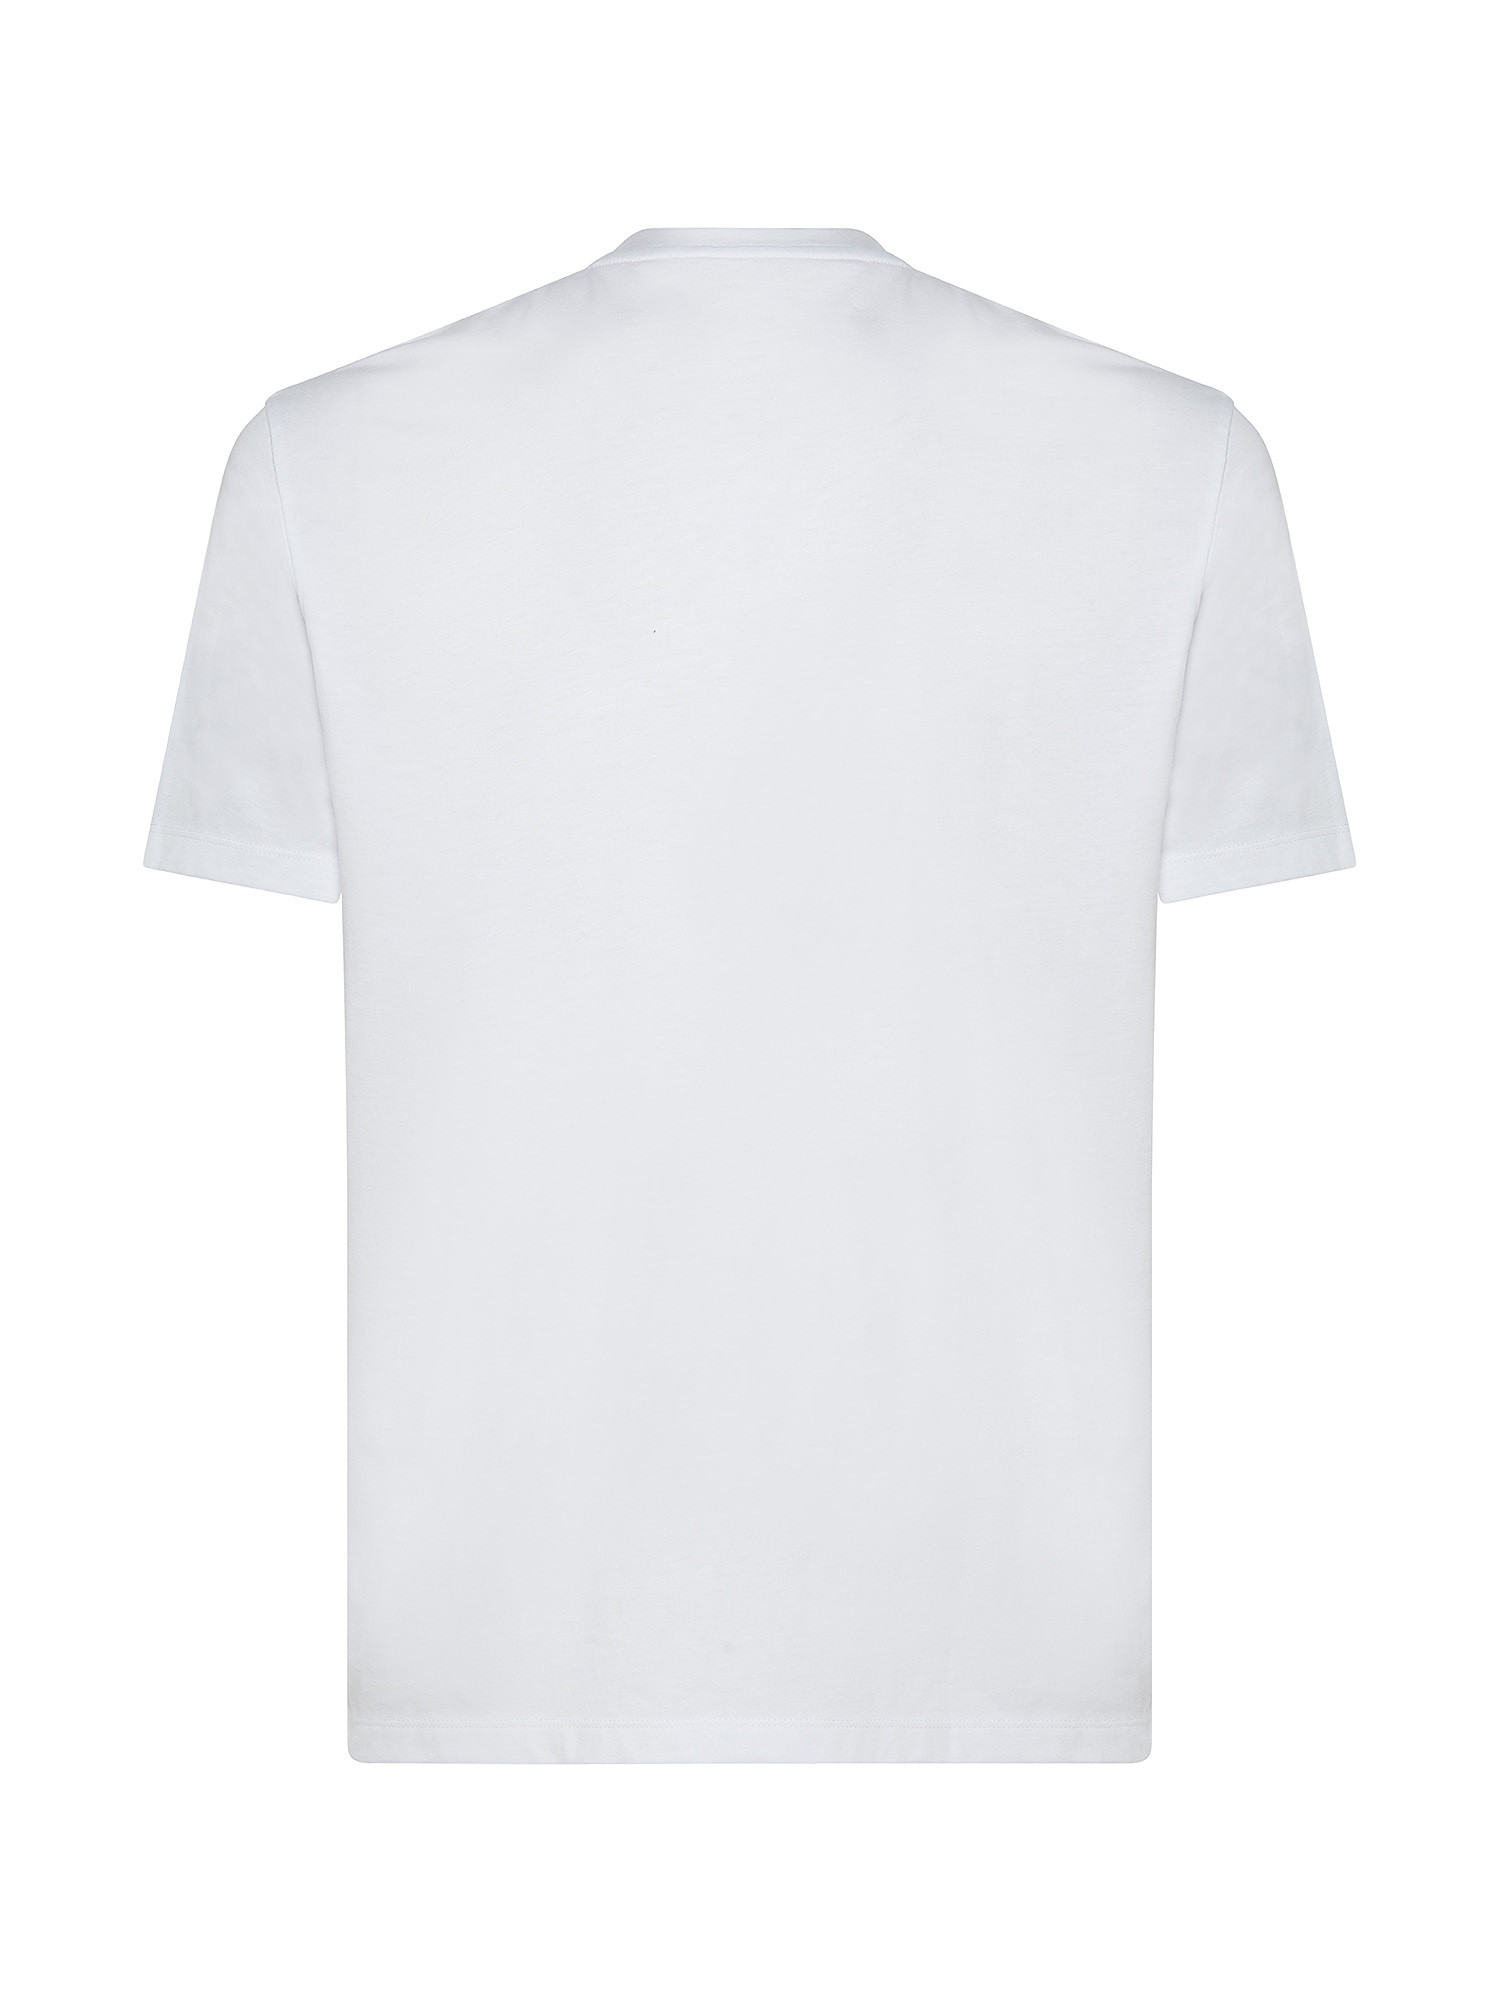 Armani Exchange - T-shirt regular fit in cotone organico con logo, Bianco, large image number 1